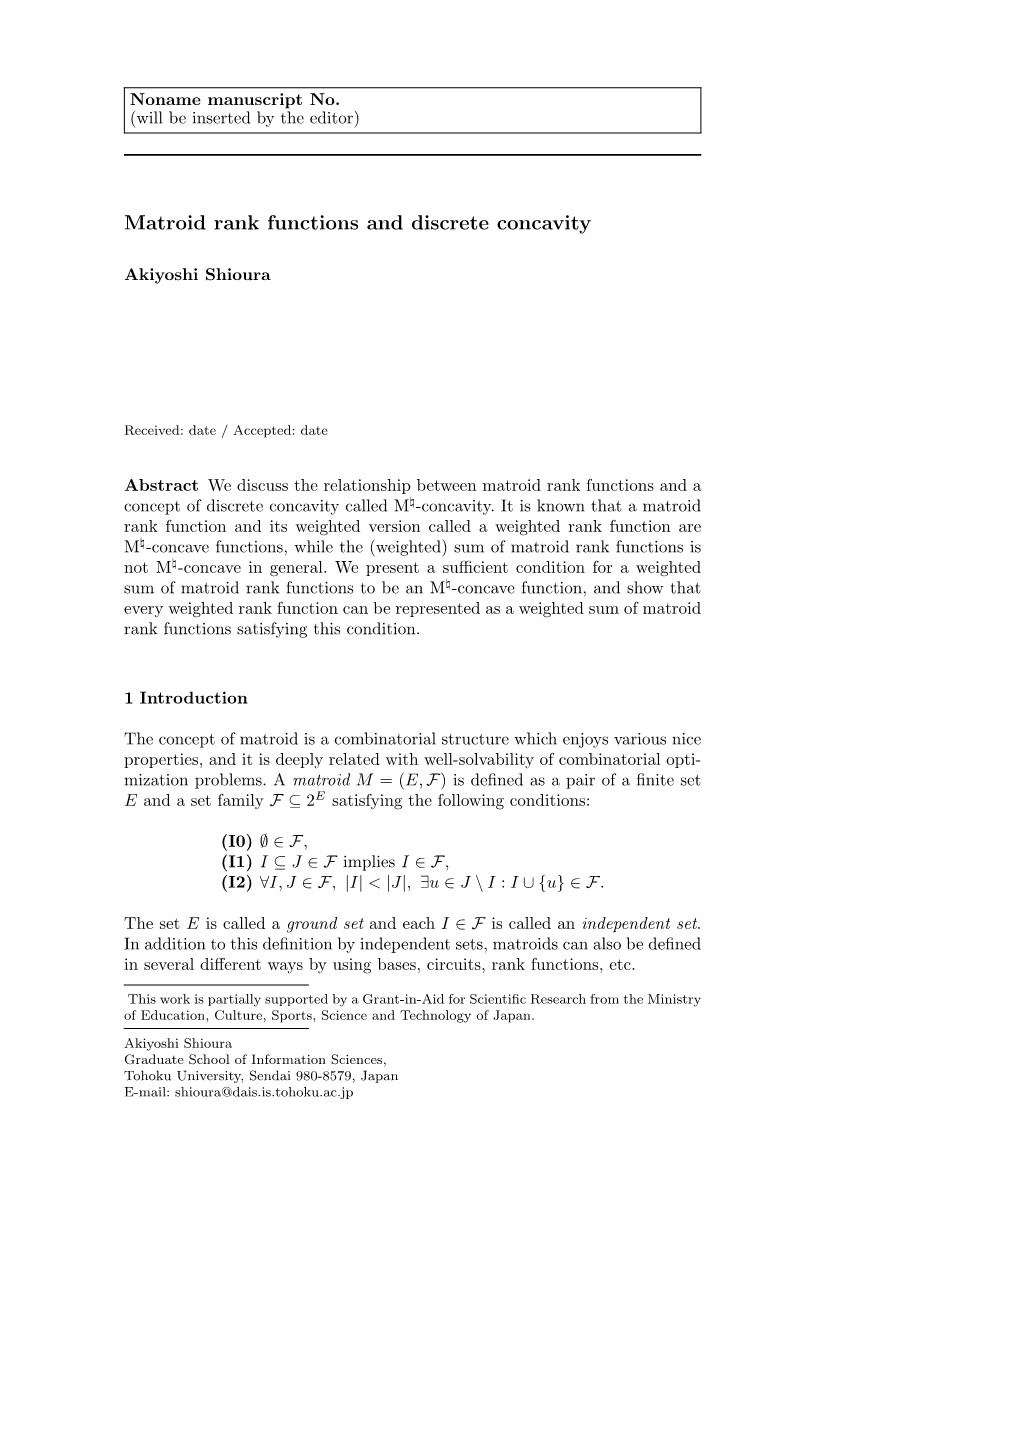 Matroid Rank Functions and Discrete Concavity